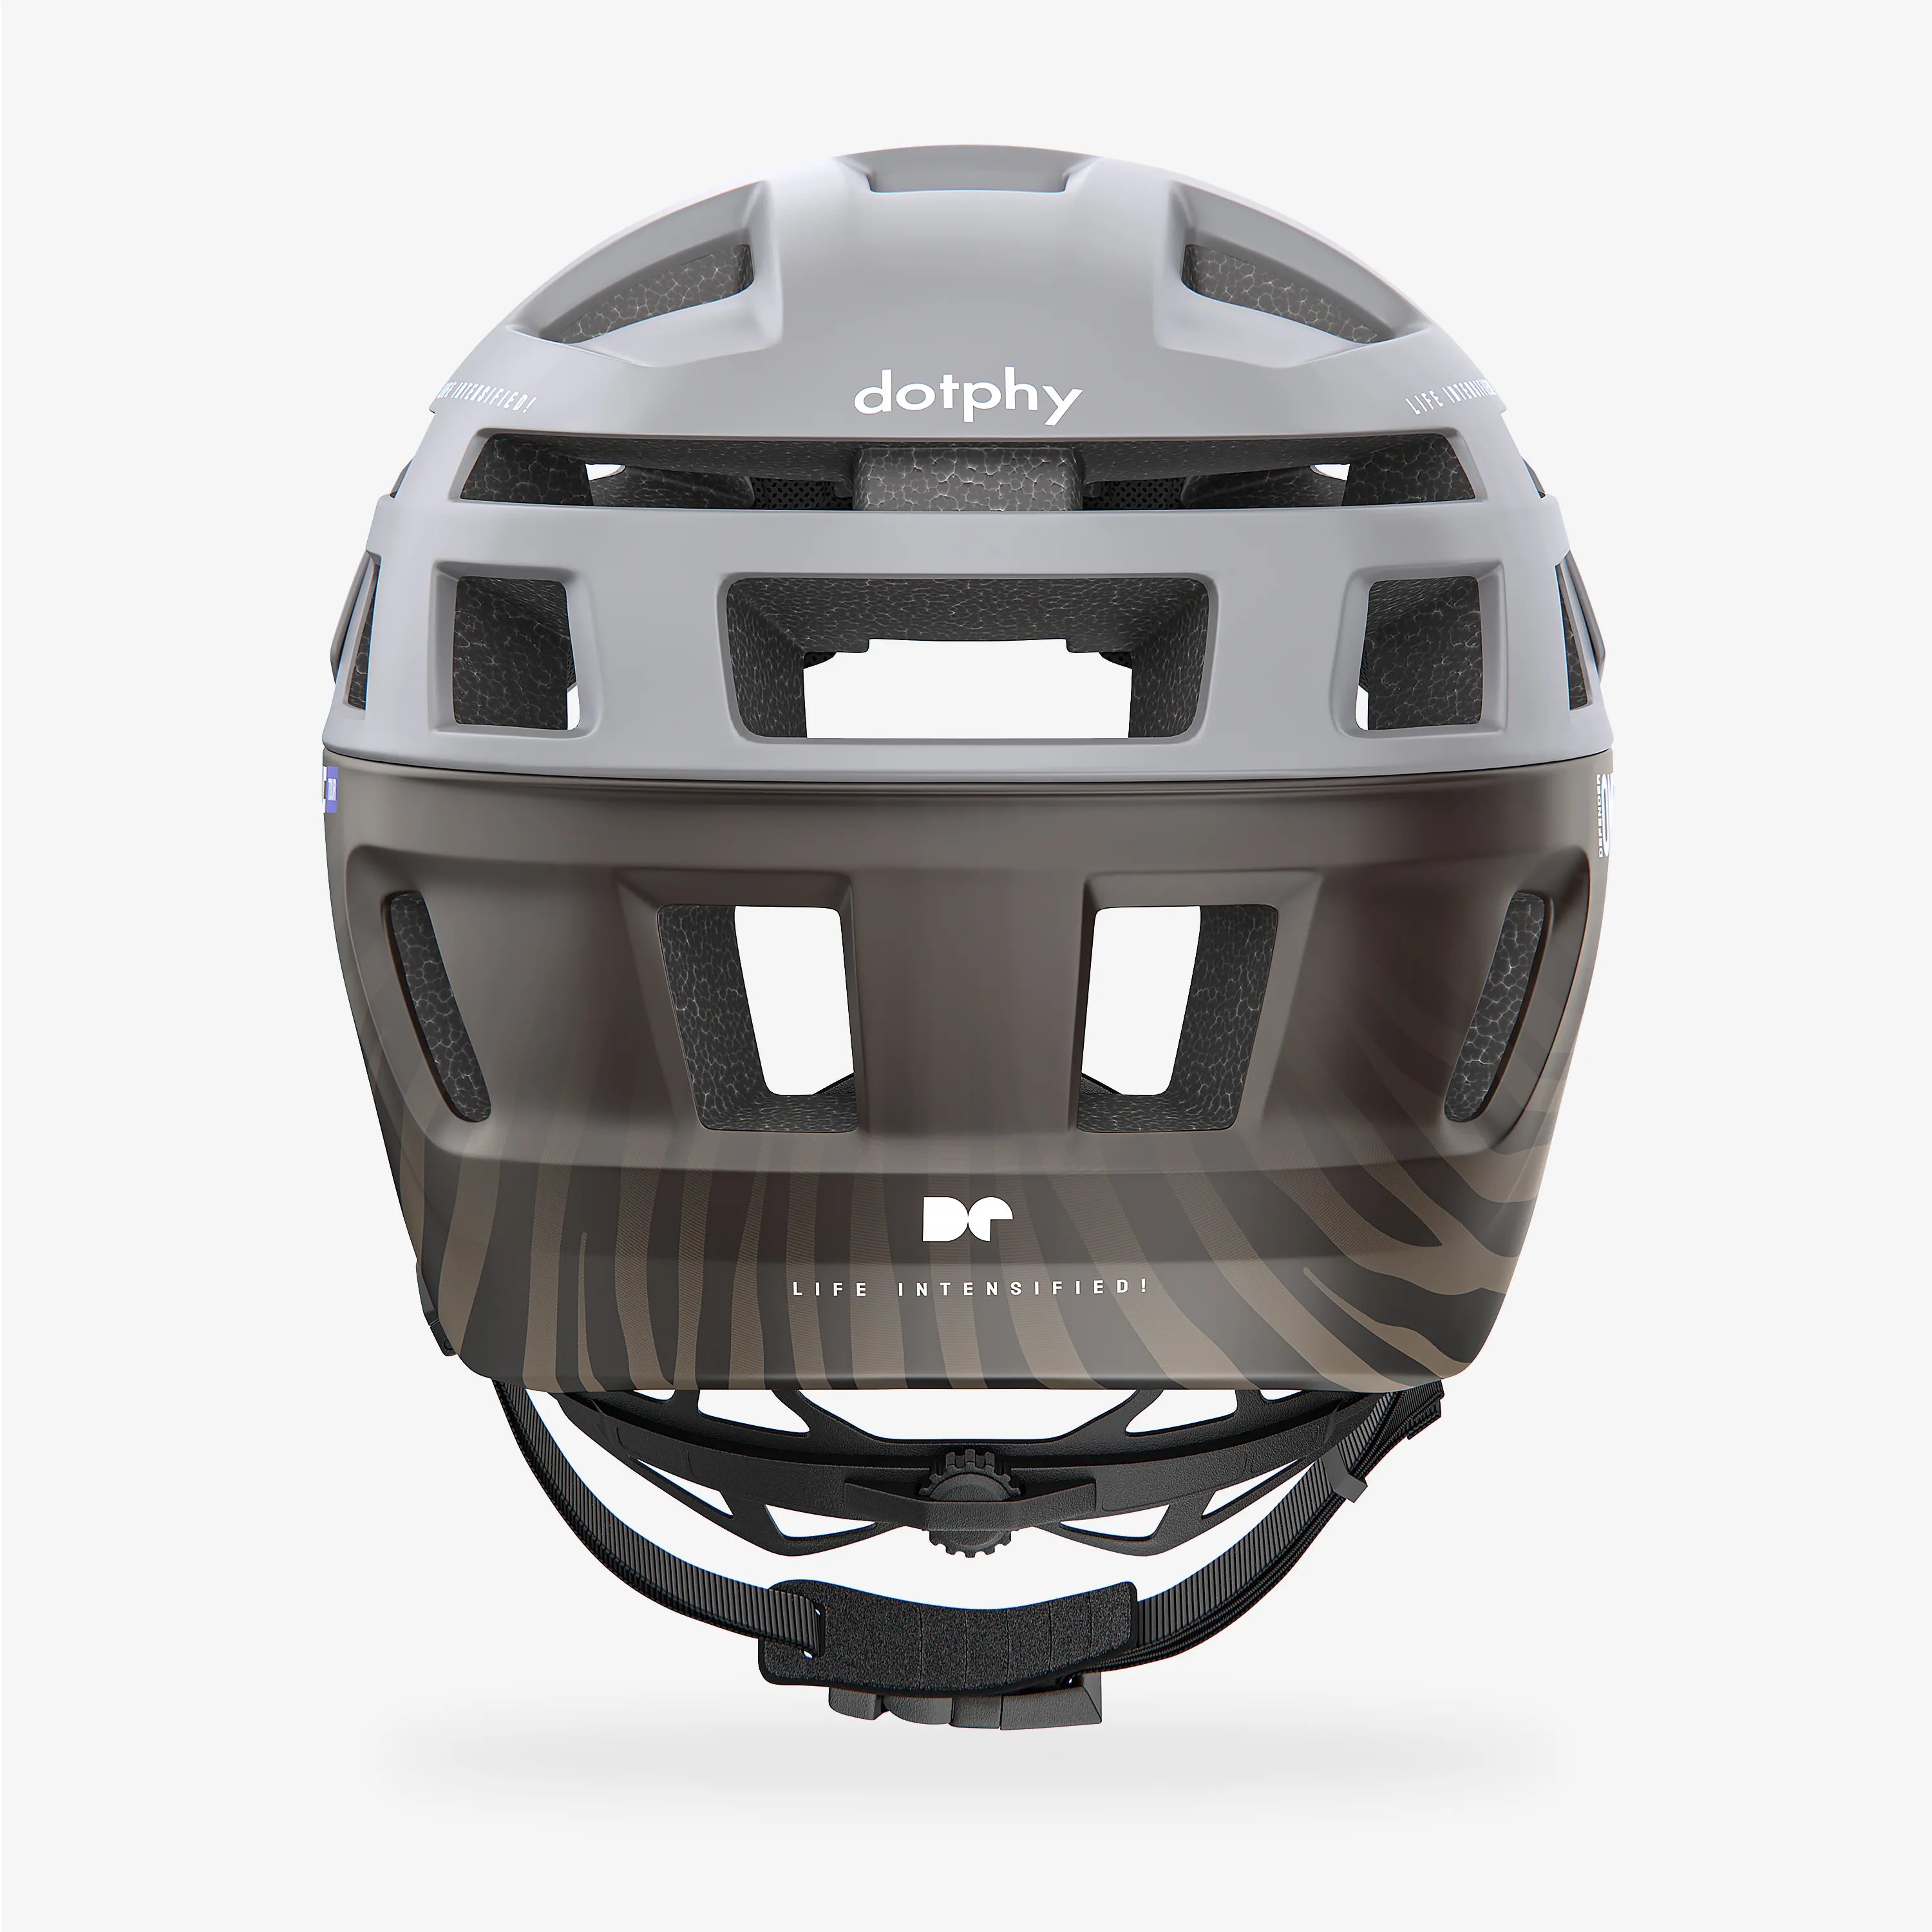 Defender One Tour Nardo Grey Mountainbike-Helm